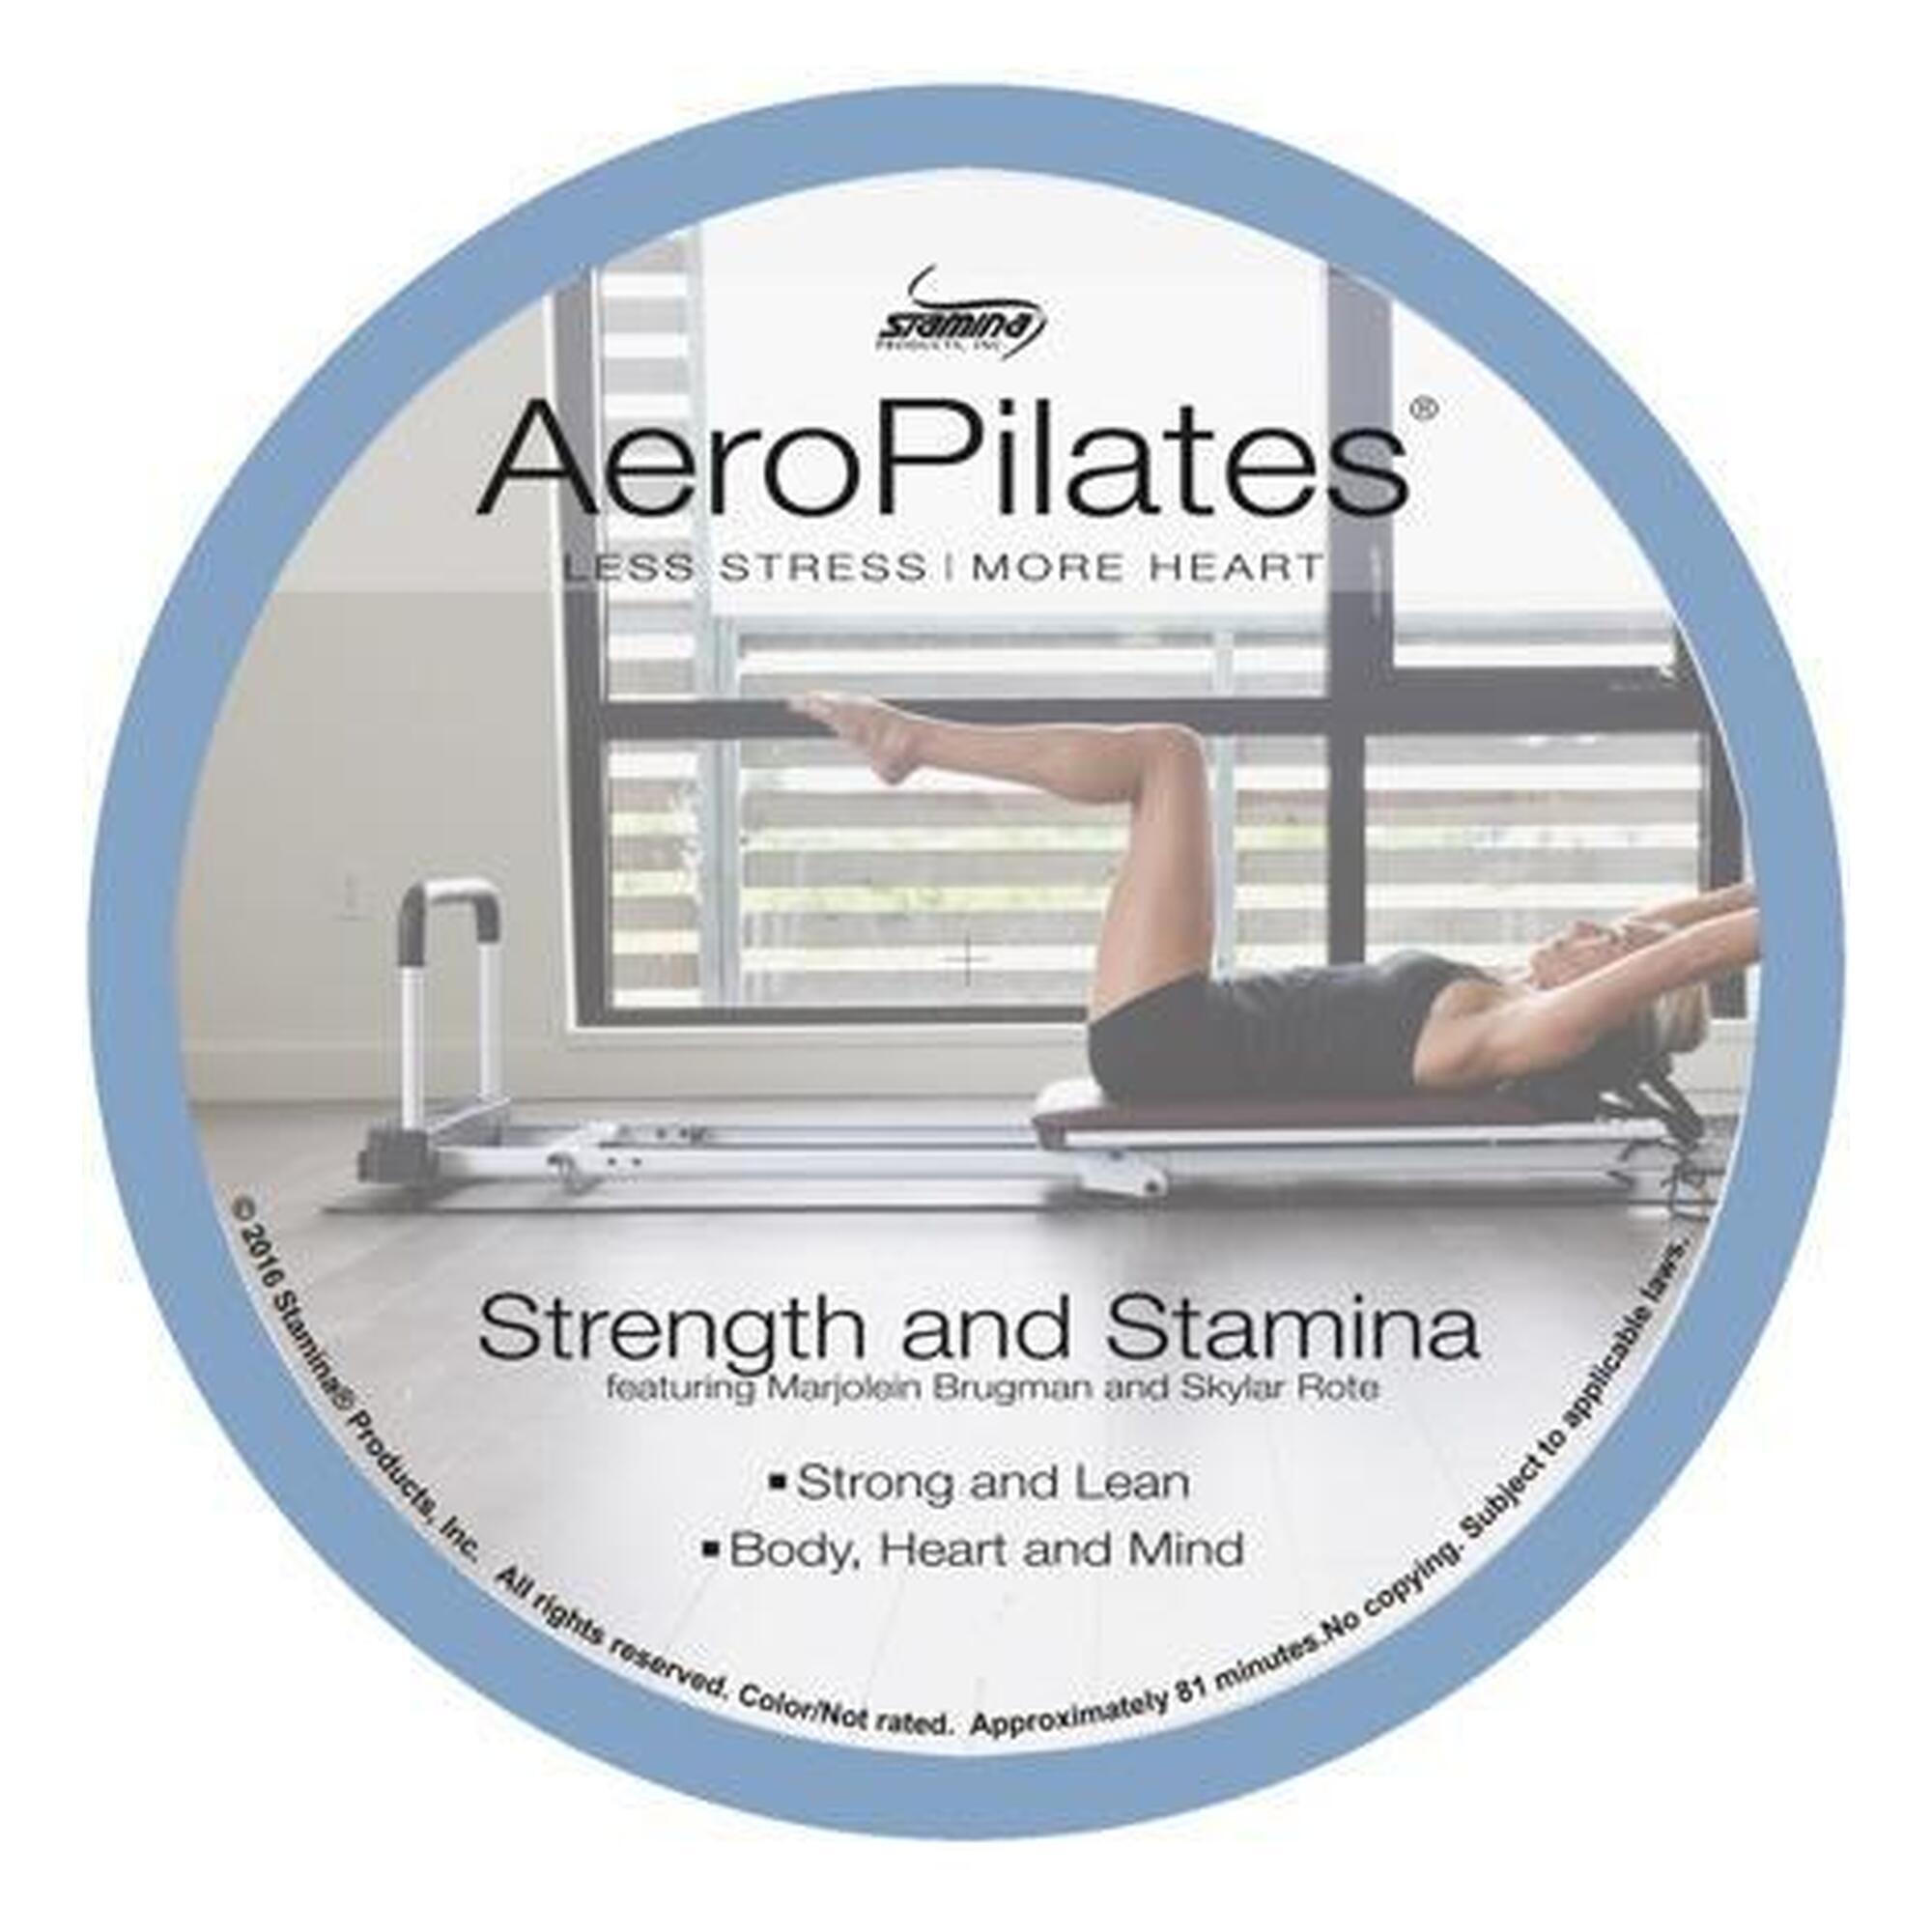 AEROPILATES AeroPilates Pilates Strength and Stamina Workout DVD -New series